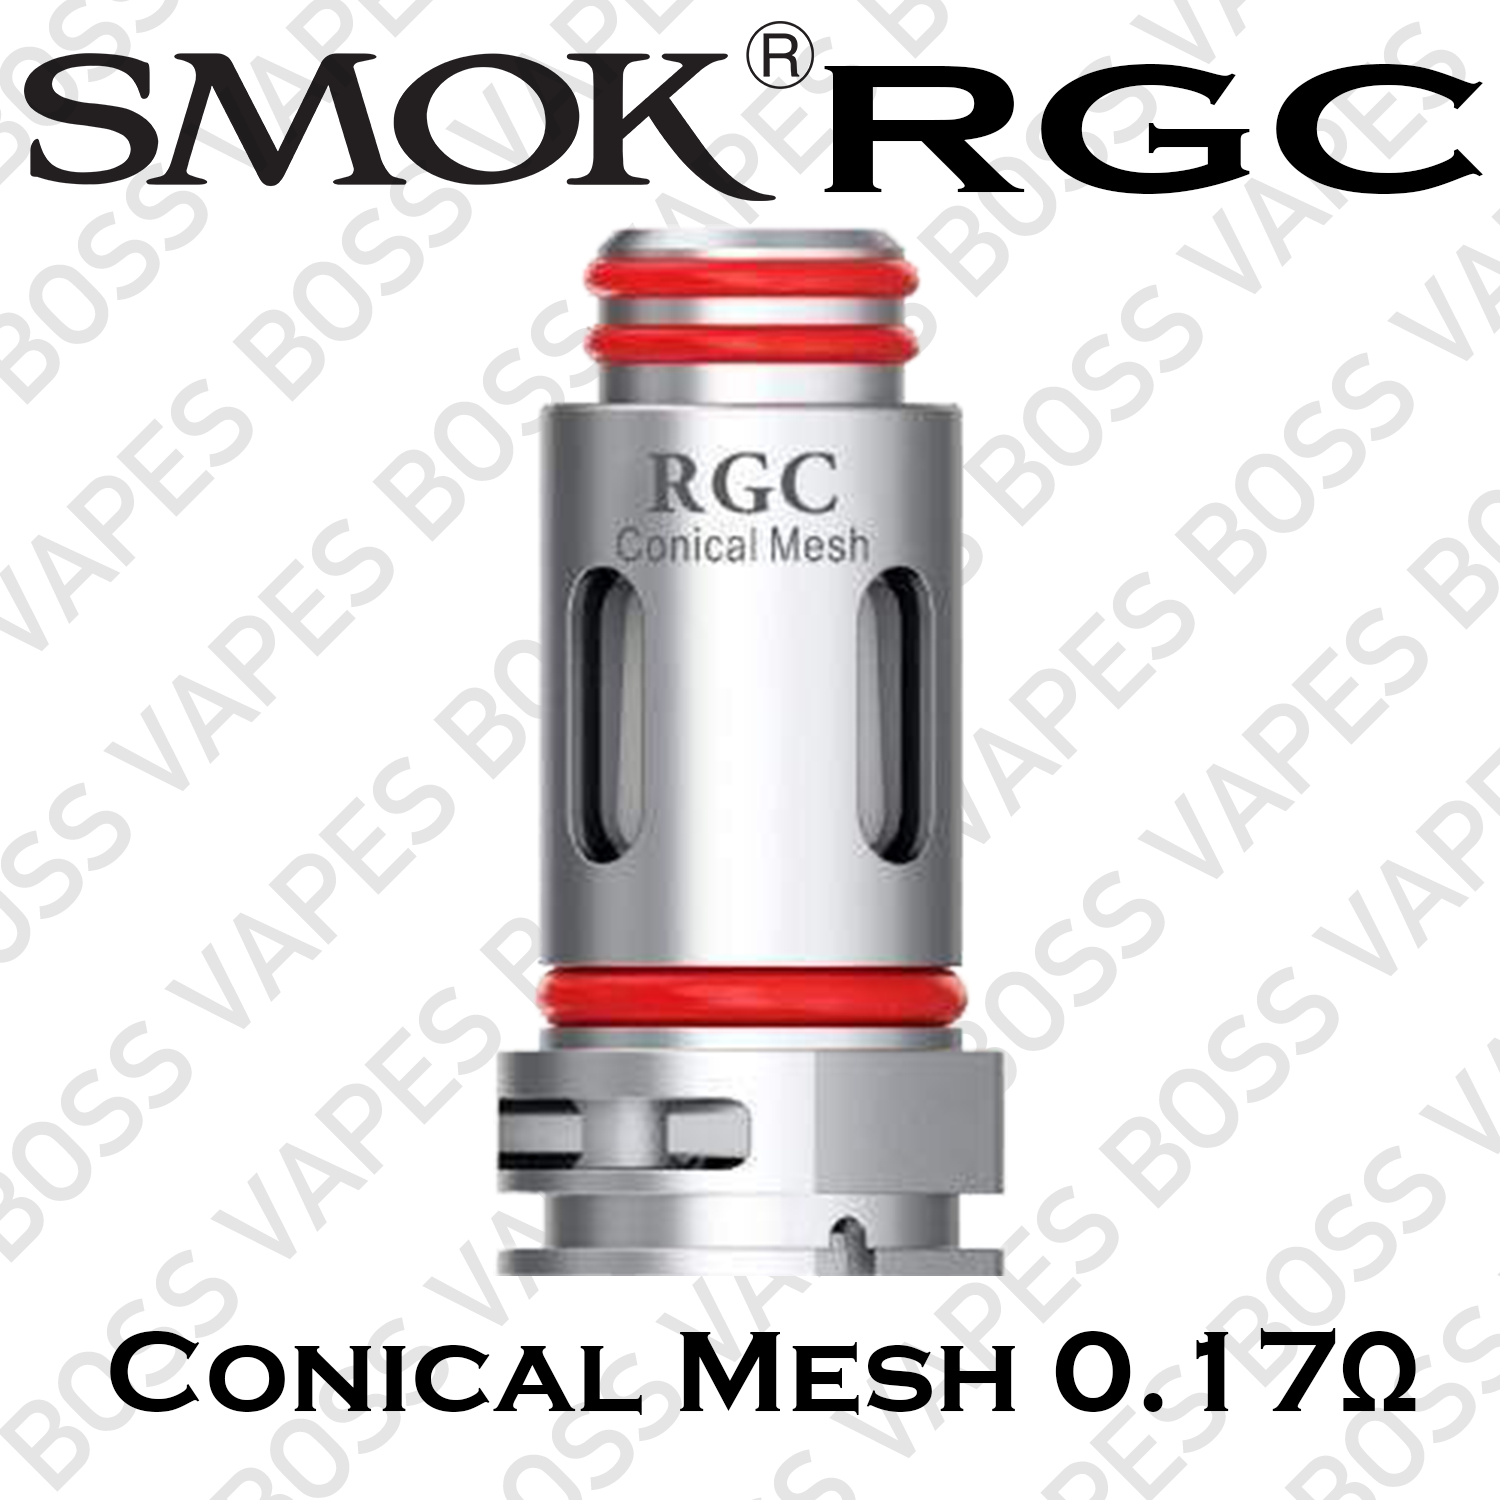 SMOK RPM COILS (Price Per Coil) - Boss Vapes